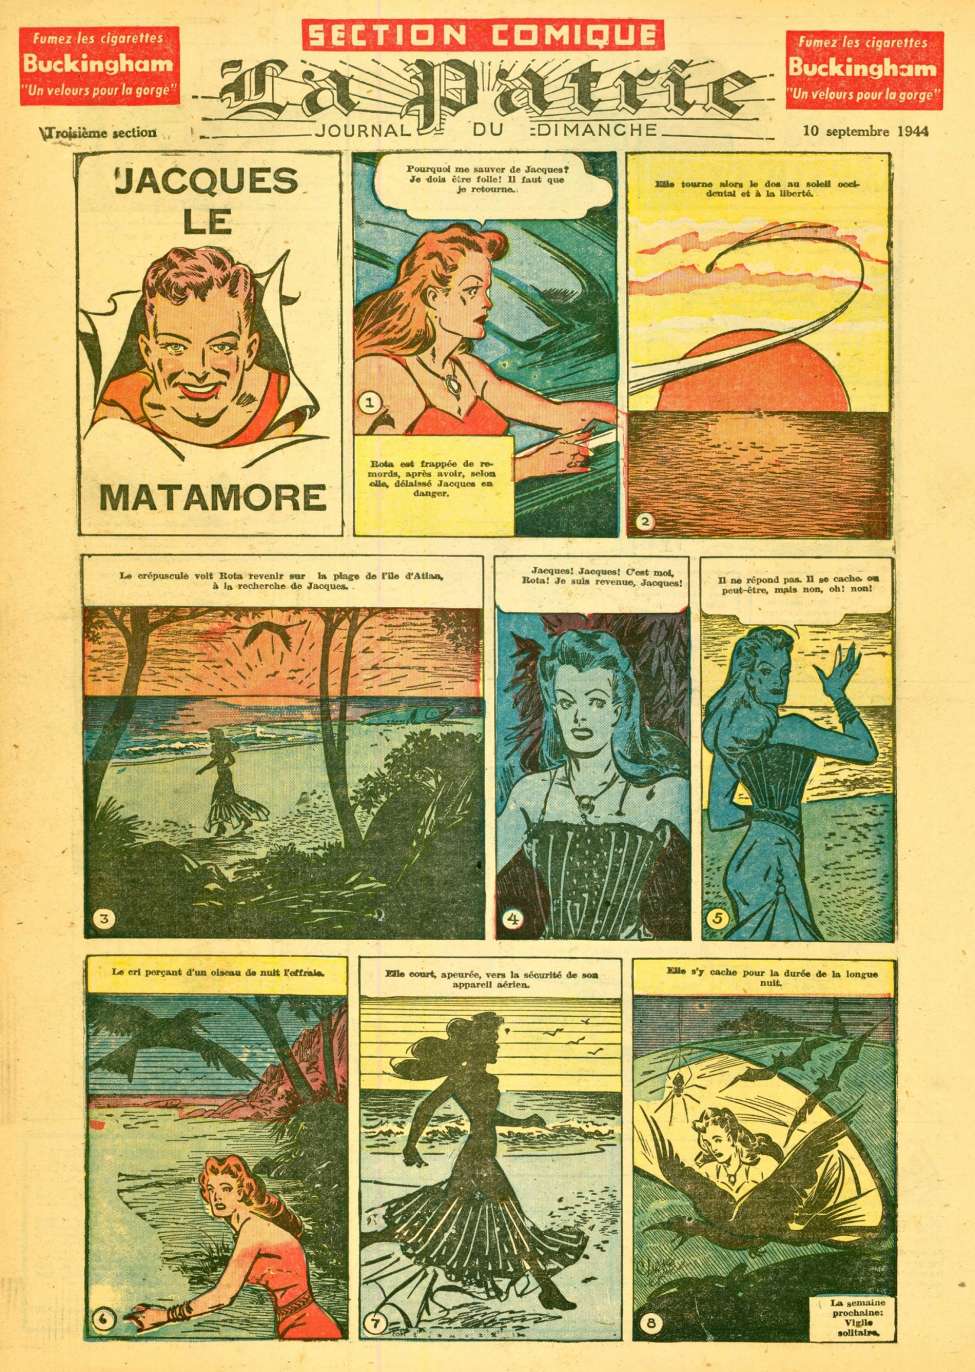 Comic Book Cover For La Patrie - Section Comique (1944-09-10)